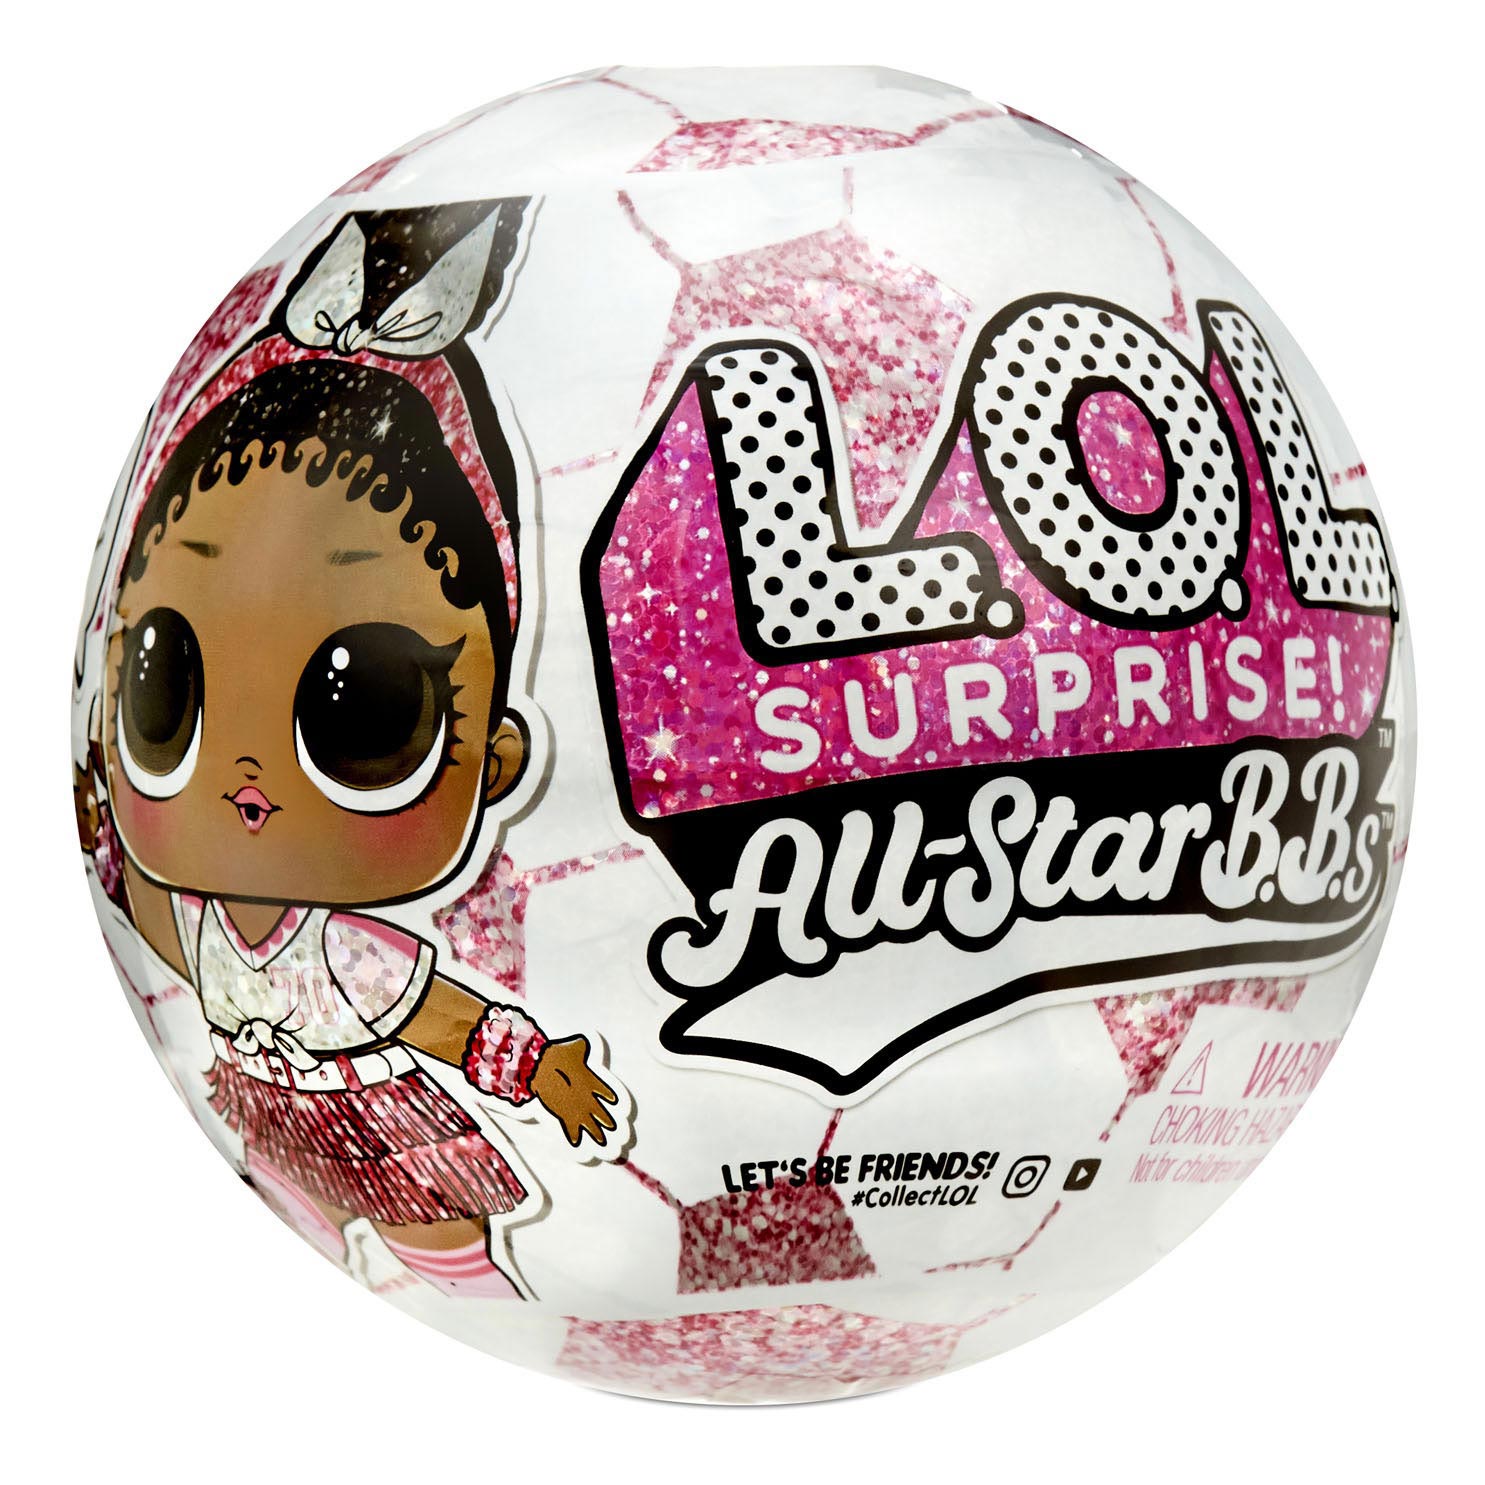 consultant dronken Verrijking L.O.L. Surprise All Star BB - Voetbal online kopen? | Lobbes Speelgoed